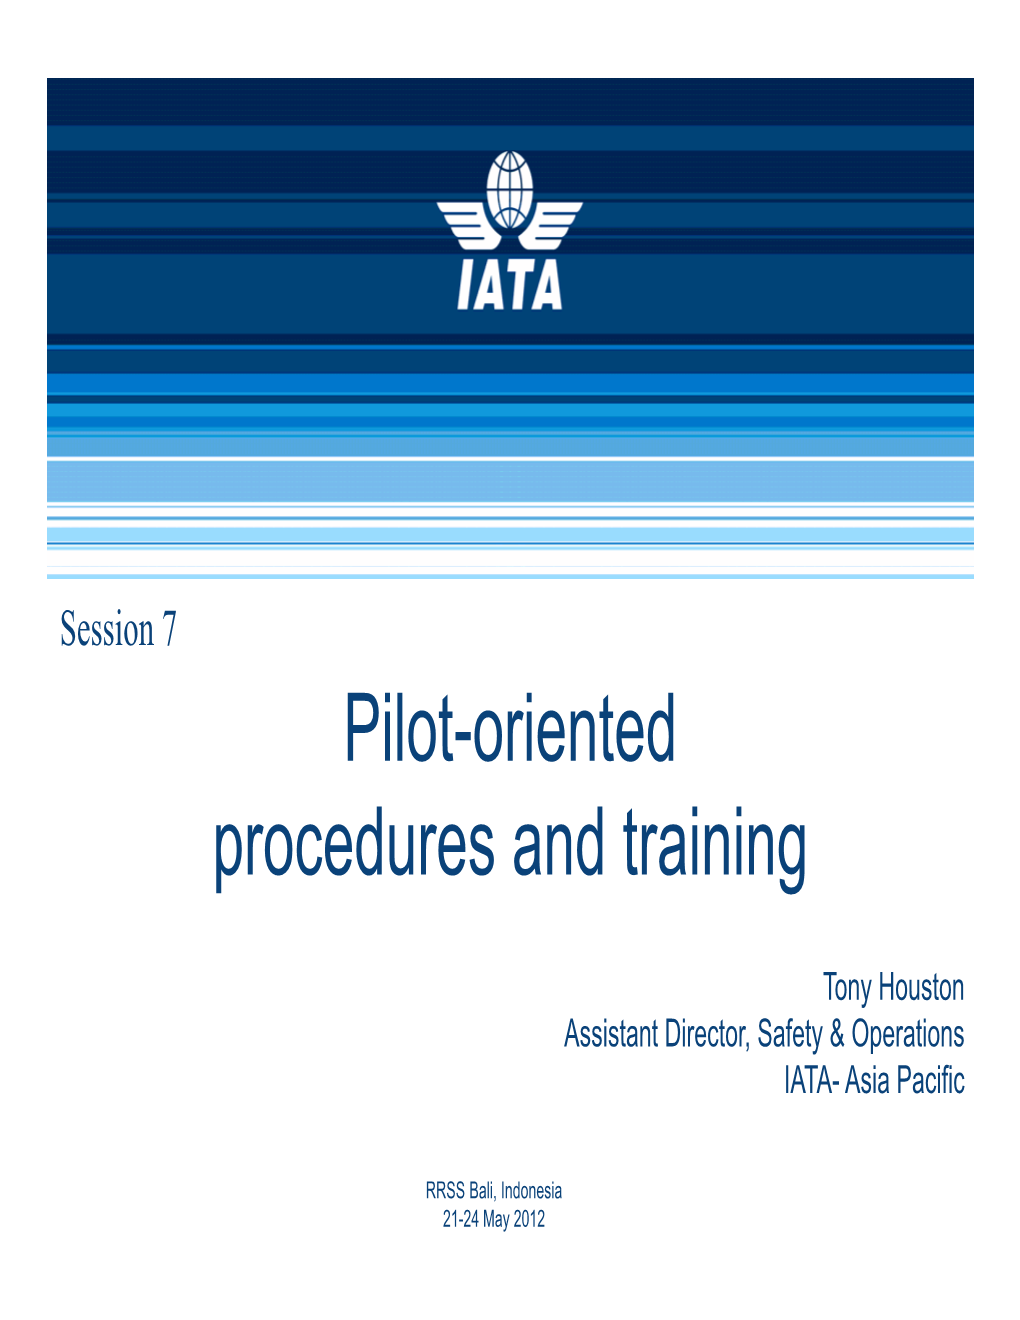 Pilot-Oriented Procedures and Training